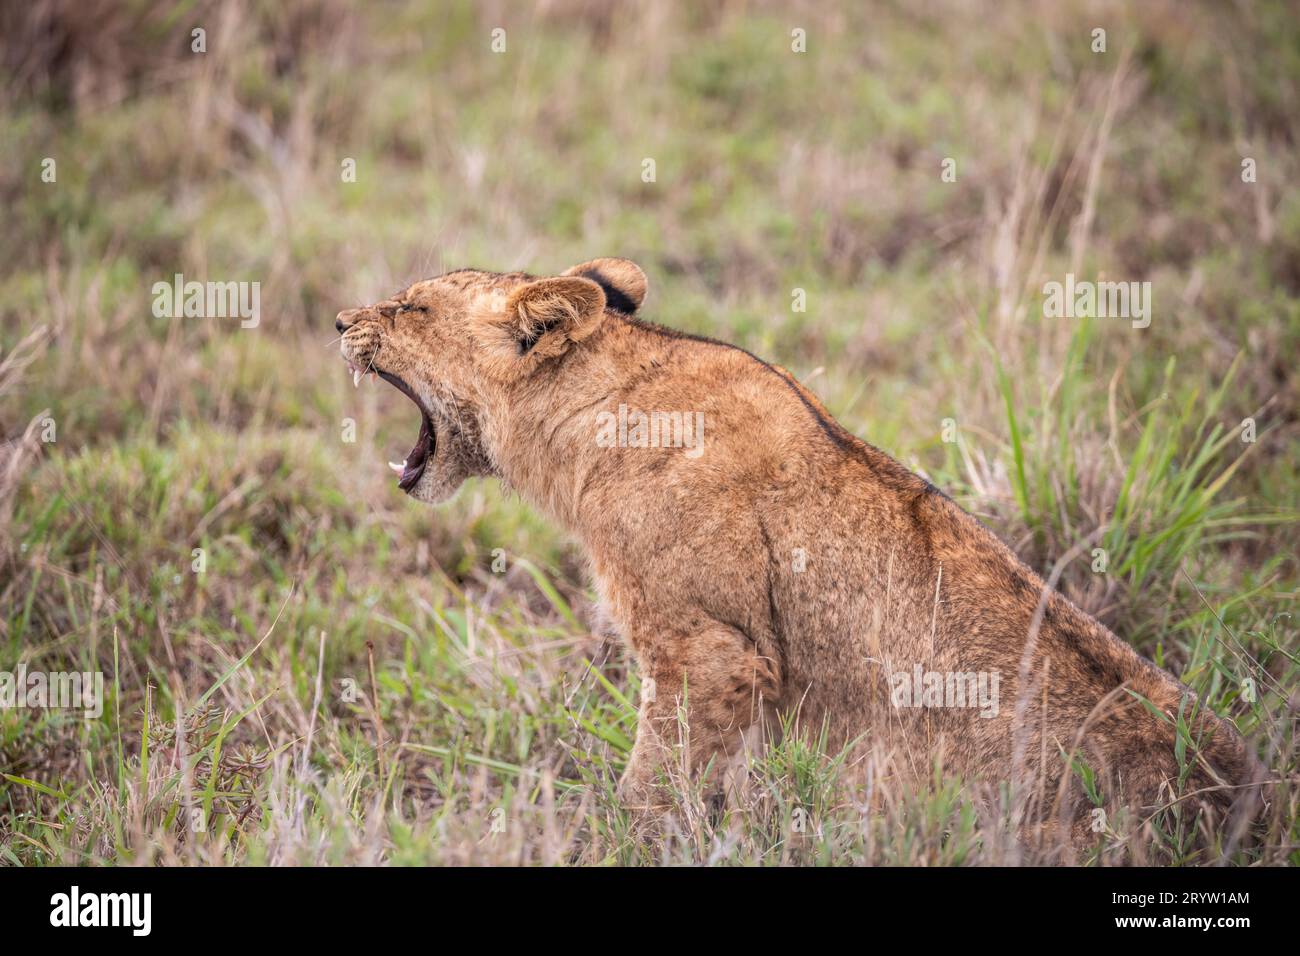 Petits lions en safari dans les steppes de l'Afrique Big Cat dans la savane. La faune du Kenya. Banque D'Images